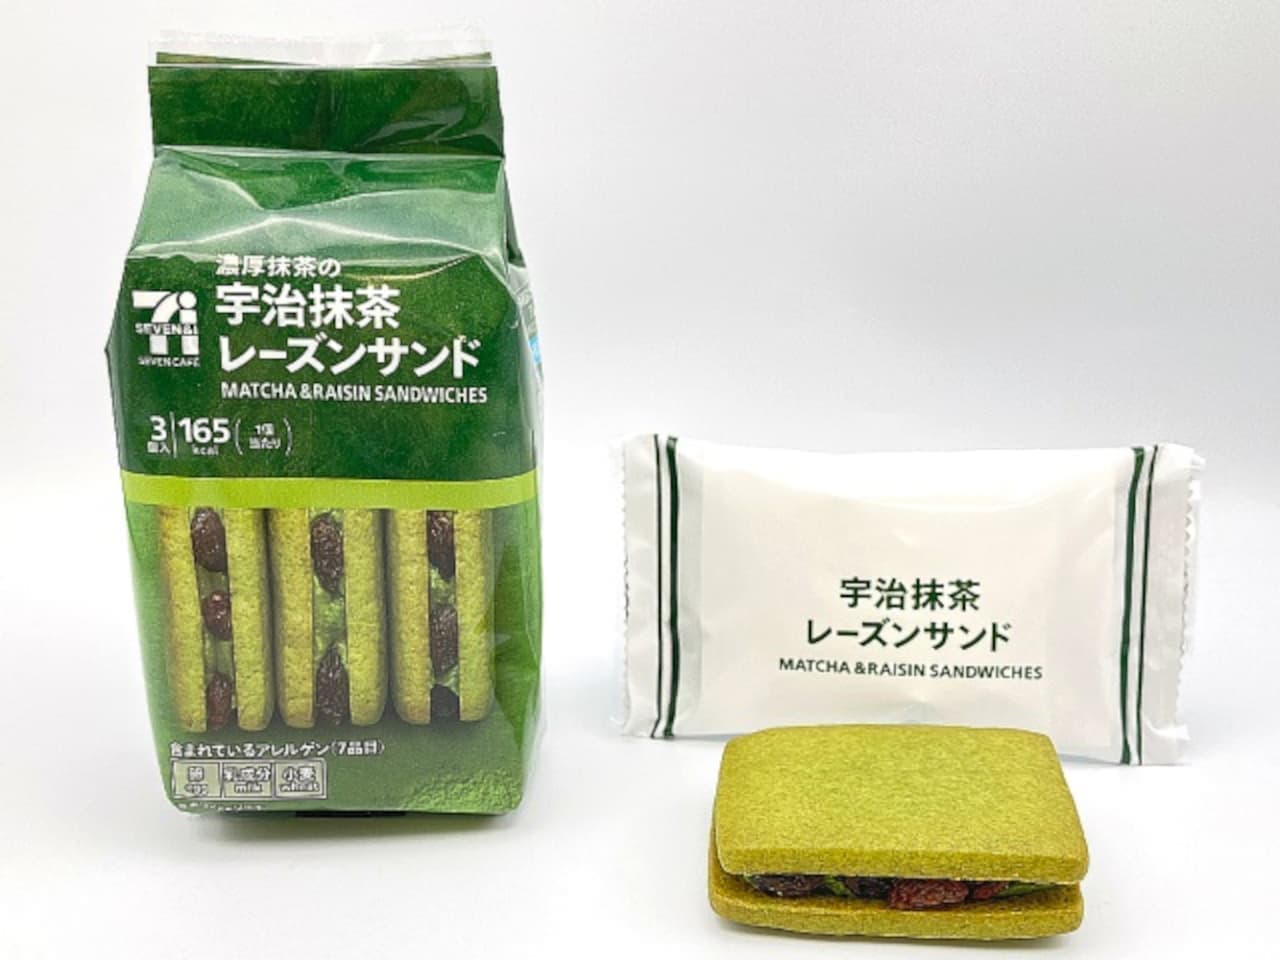 7-ELEVEN "7 Cafe Uji Green Tea Raisin Sandwich